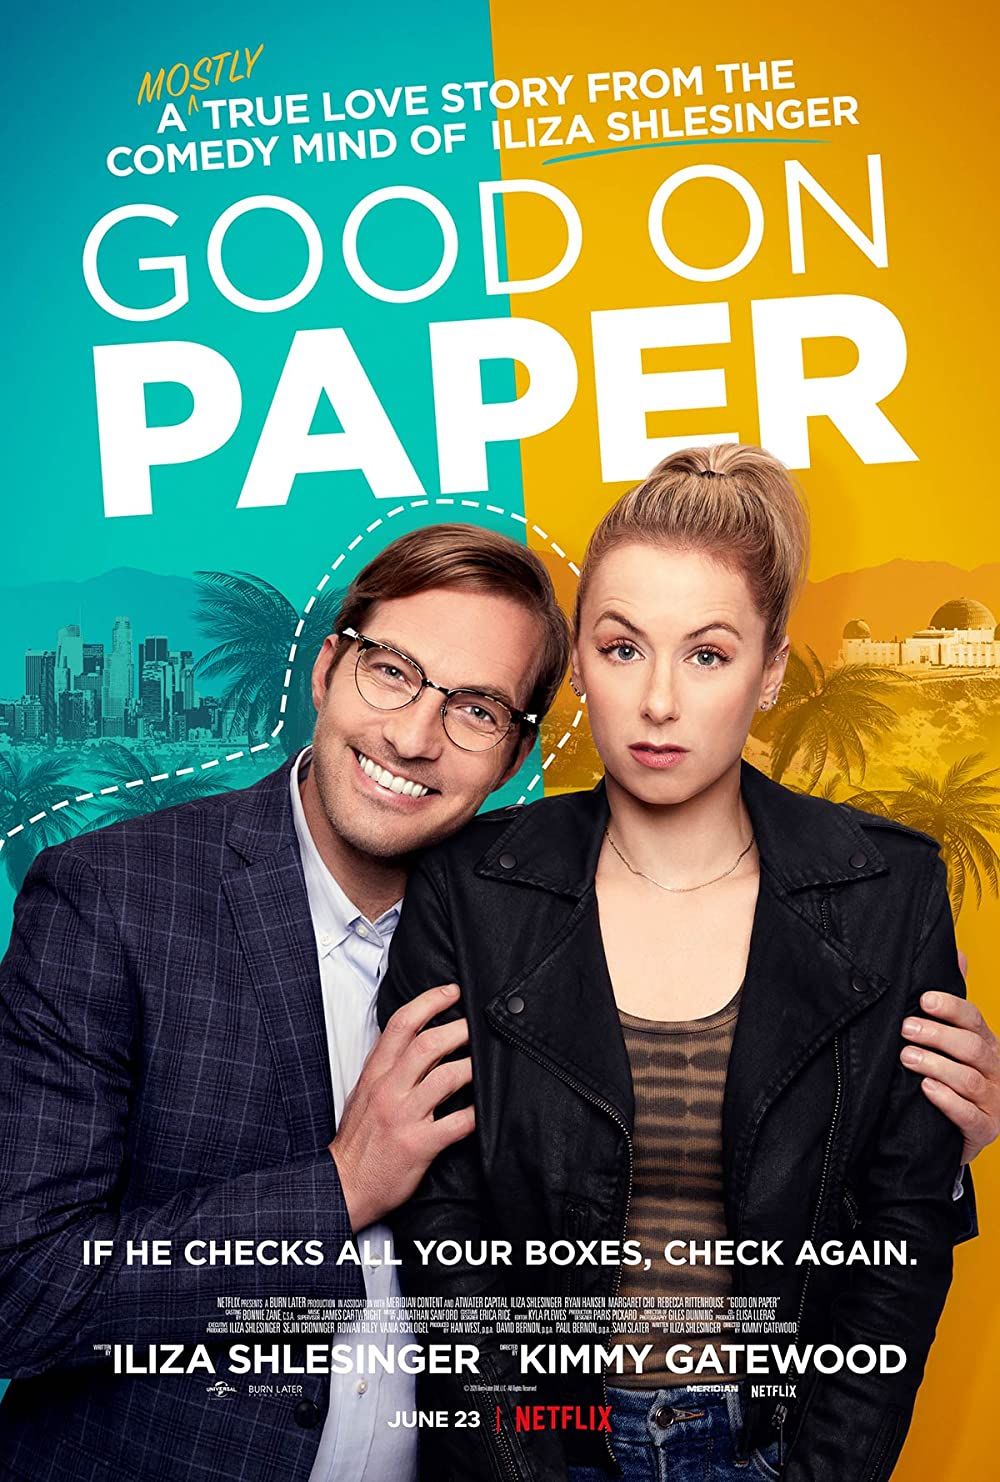 Comedy Romance Movies List On Netflix Good on paper 